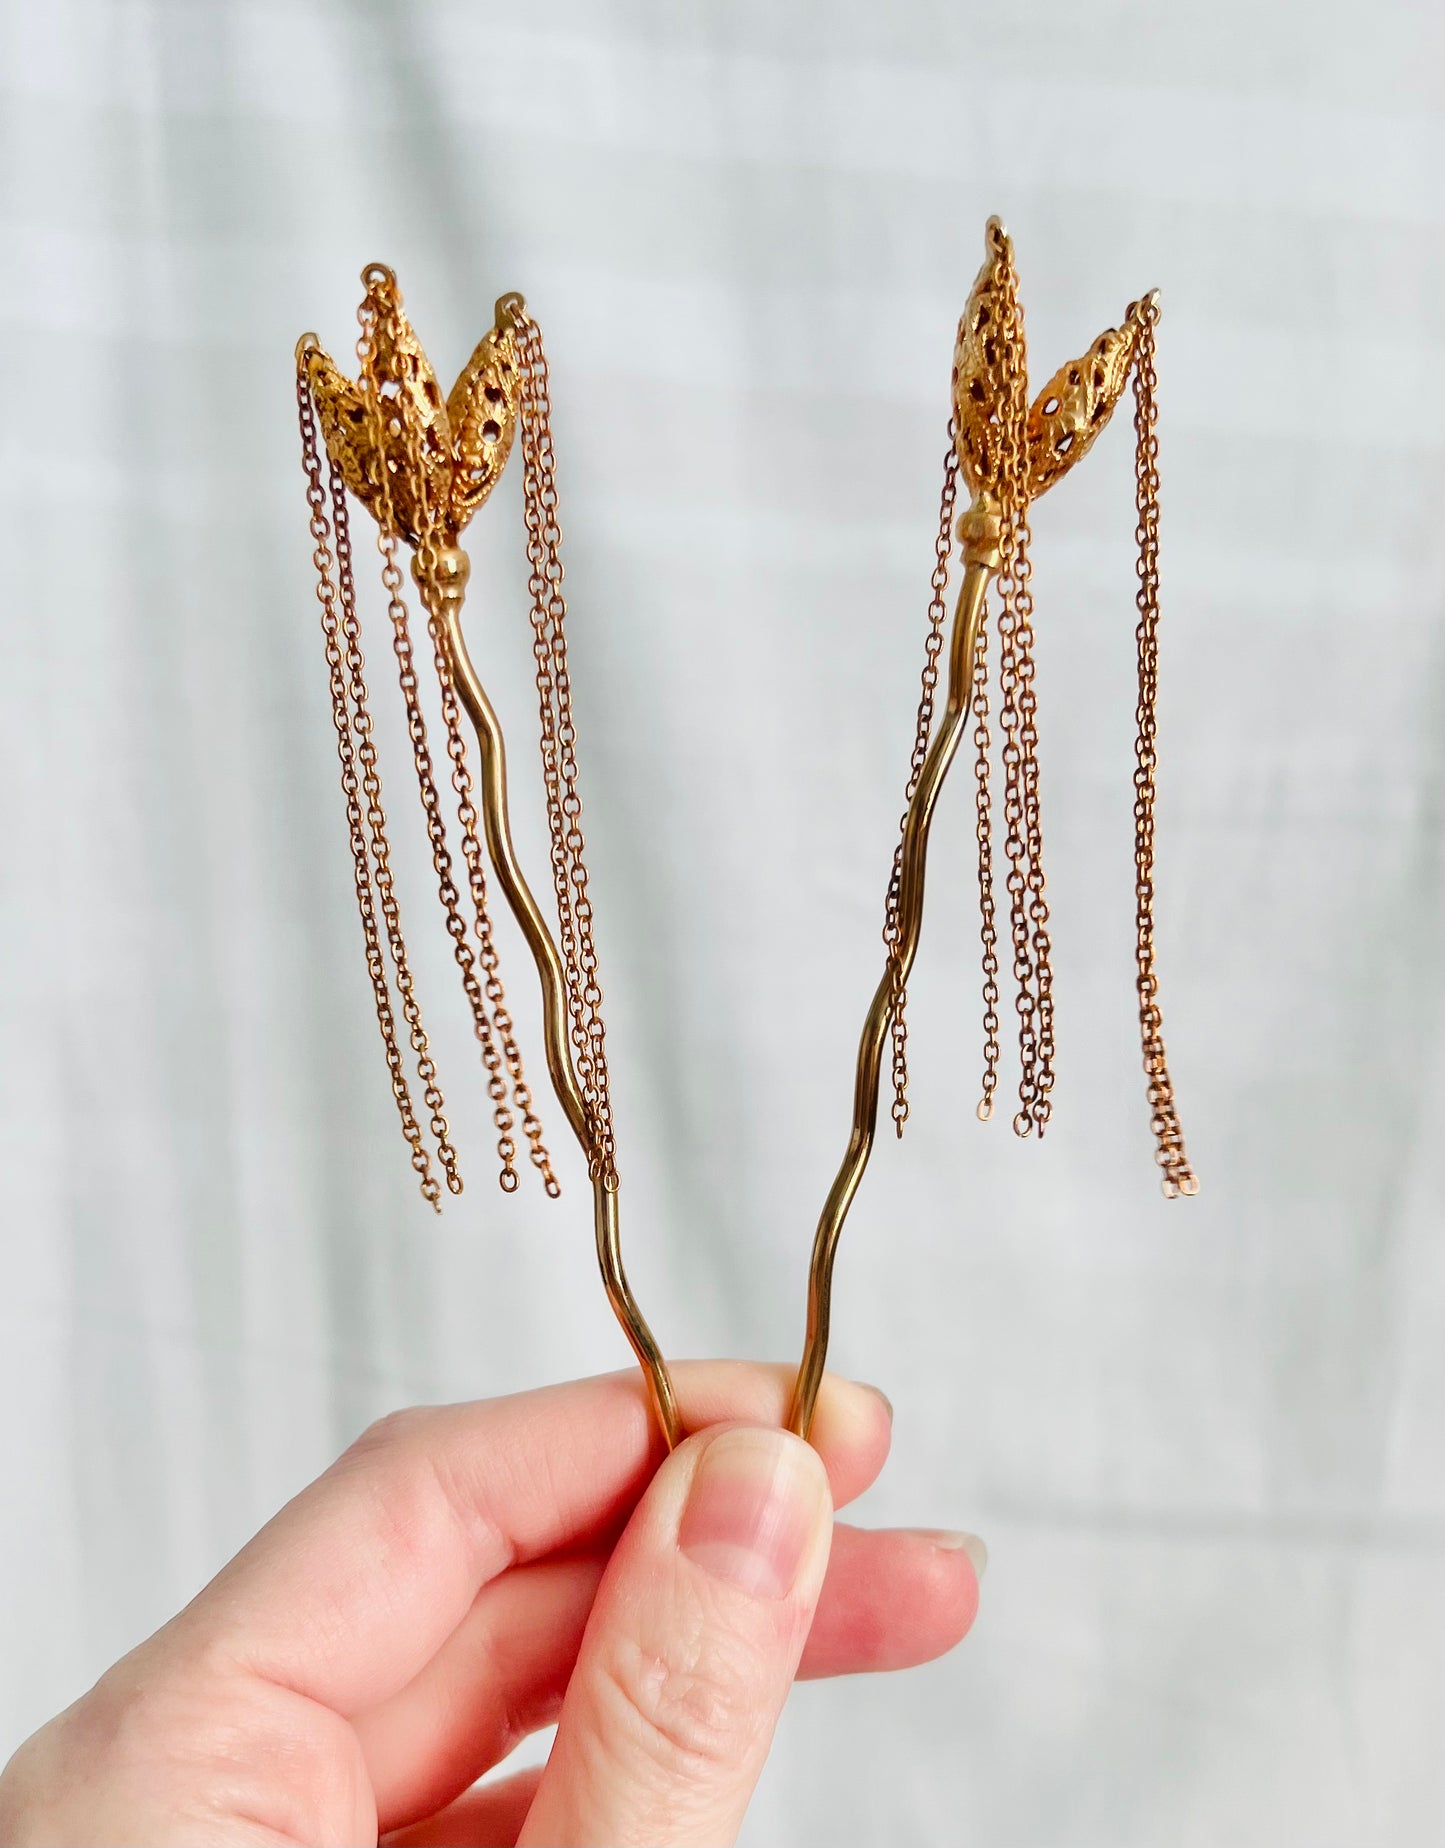 Deadstock Vintage Filigree Hair Sticks with Chain Tassels